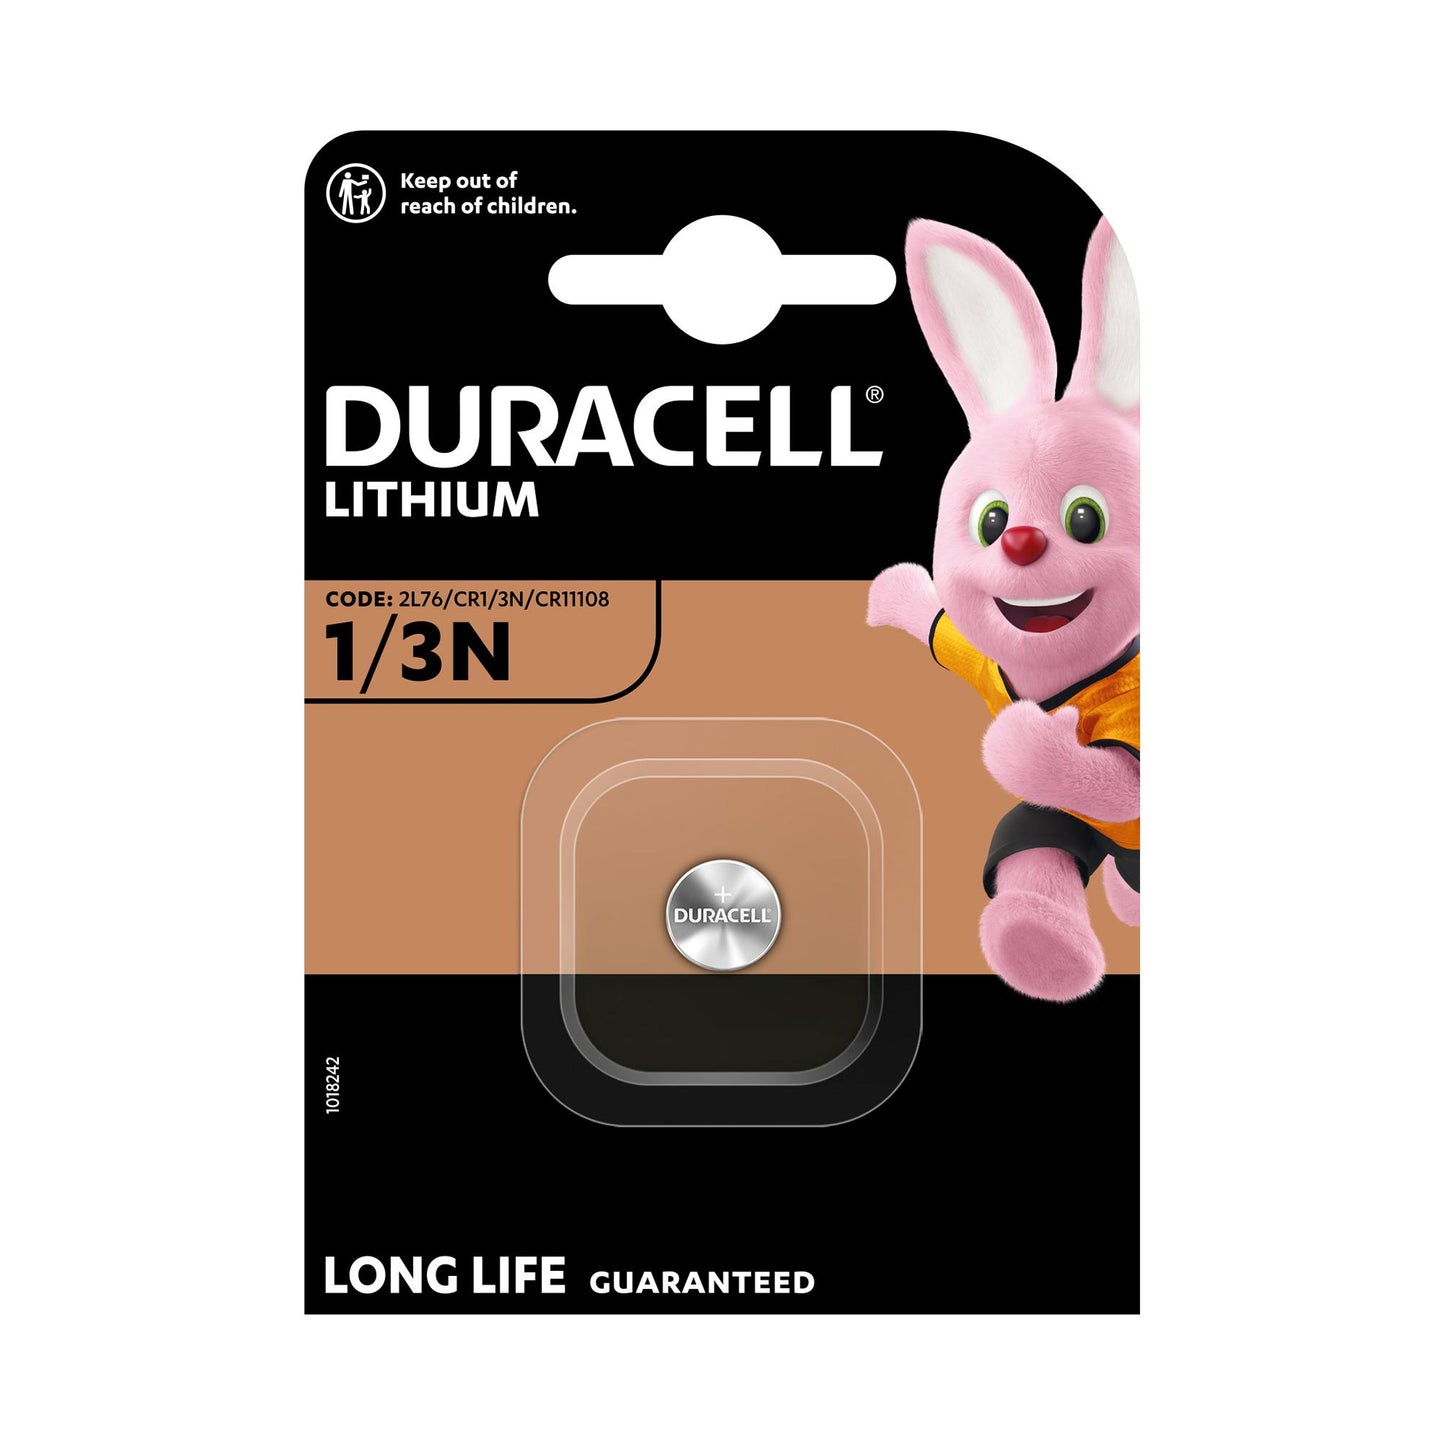 DURACELL Batterie Lithium Knopfzelle CR1/3N 2L76, 3V Photo, Retail Blister (1-Pack)